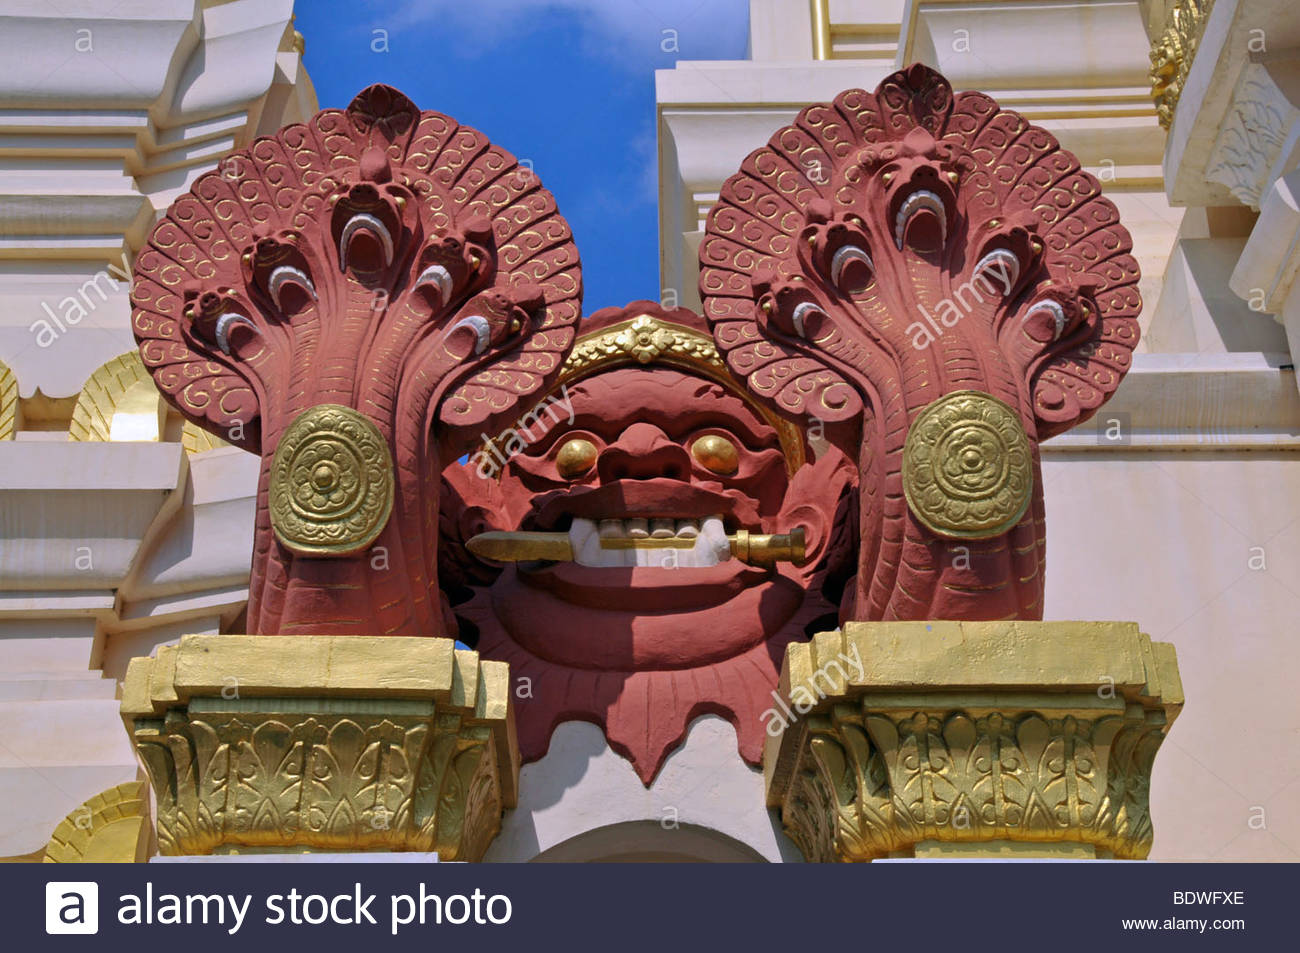 Nice Images Collection: Lord Naga Desktop Wallpapers